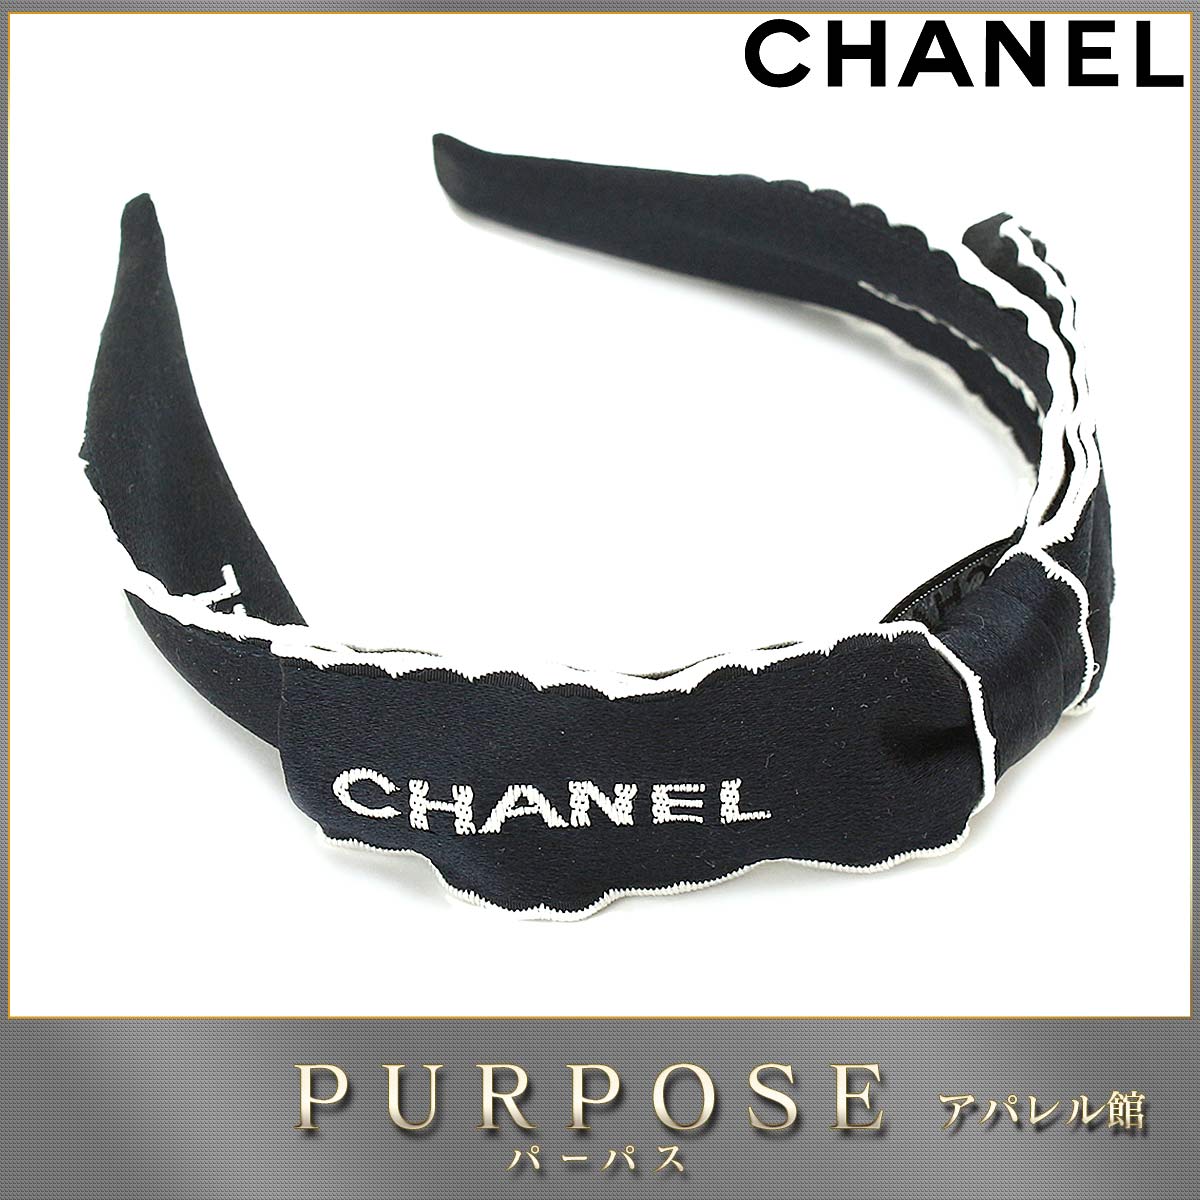 White Chanel Logo - Purpose Inc: Chanel CHANEL logo ribbon headband satin black white